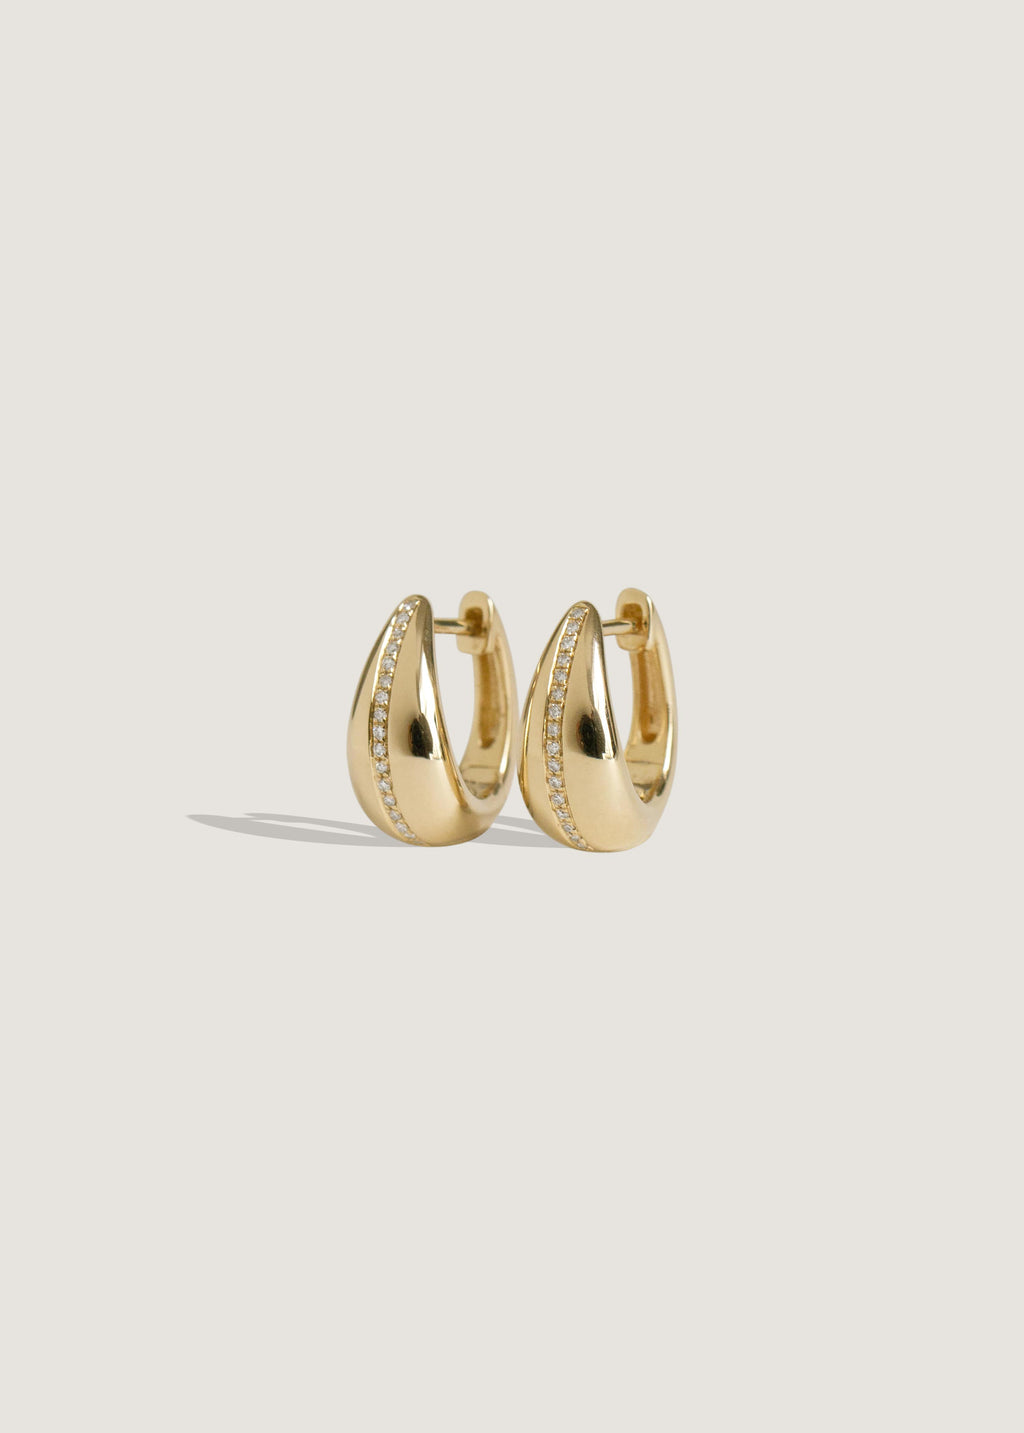 Kinn Studio Classic Hoop Earrings - Gold - M